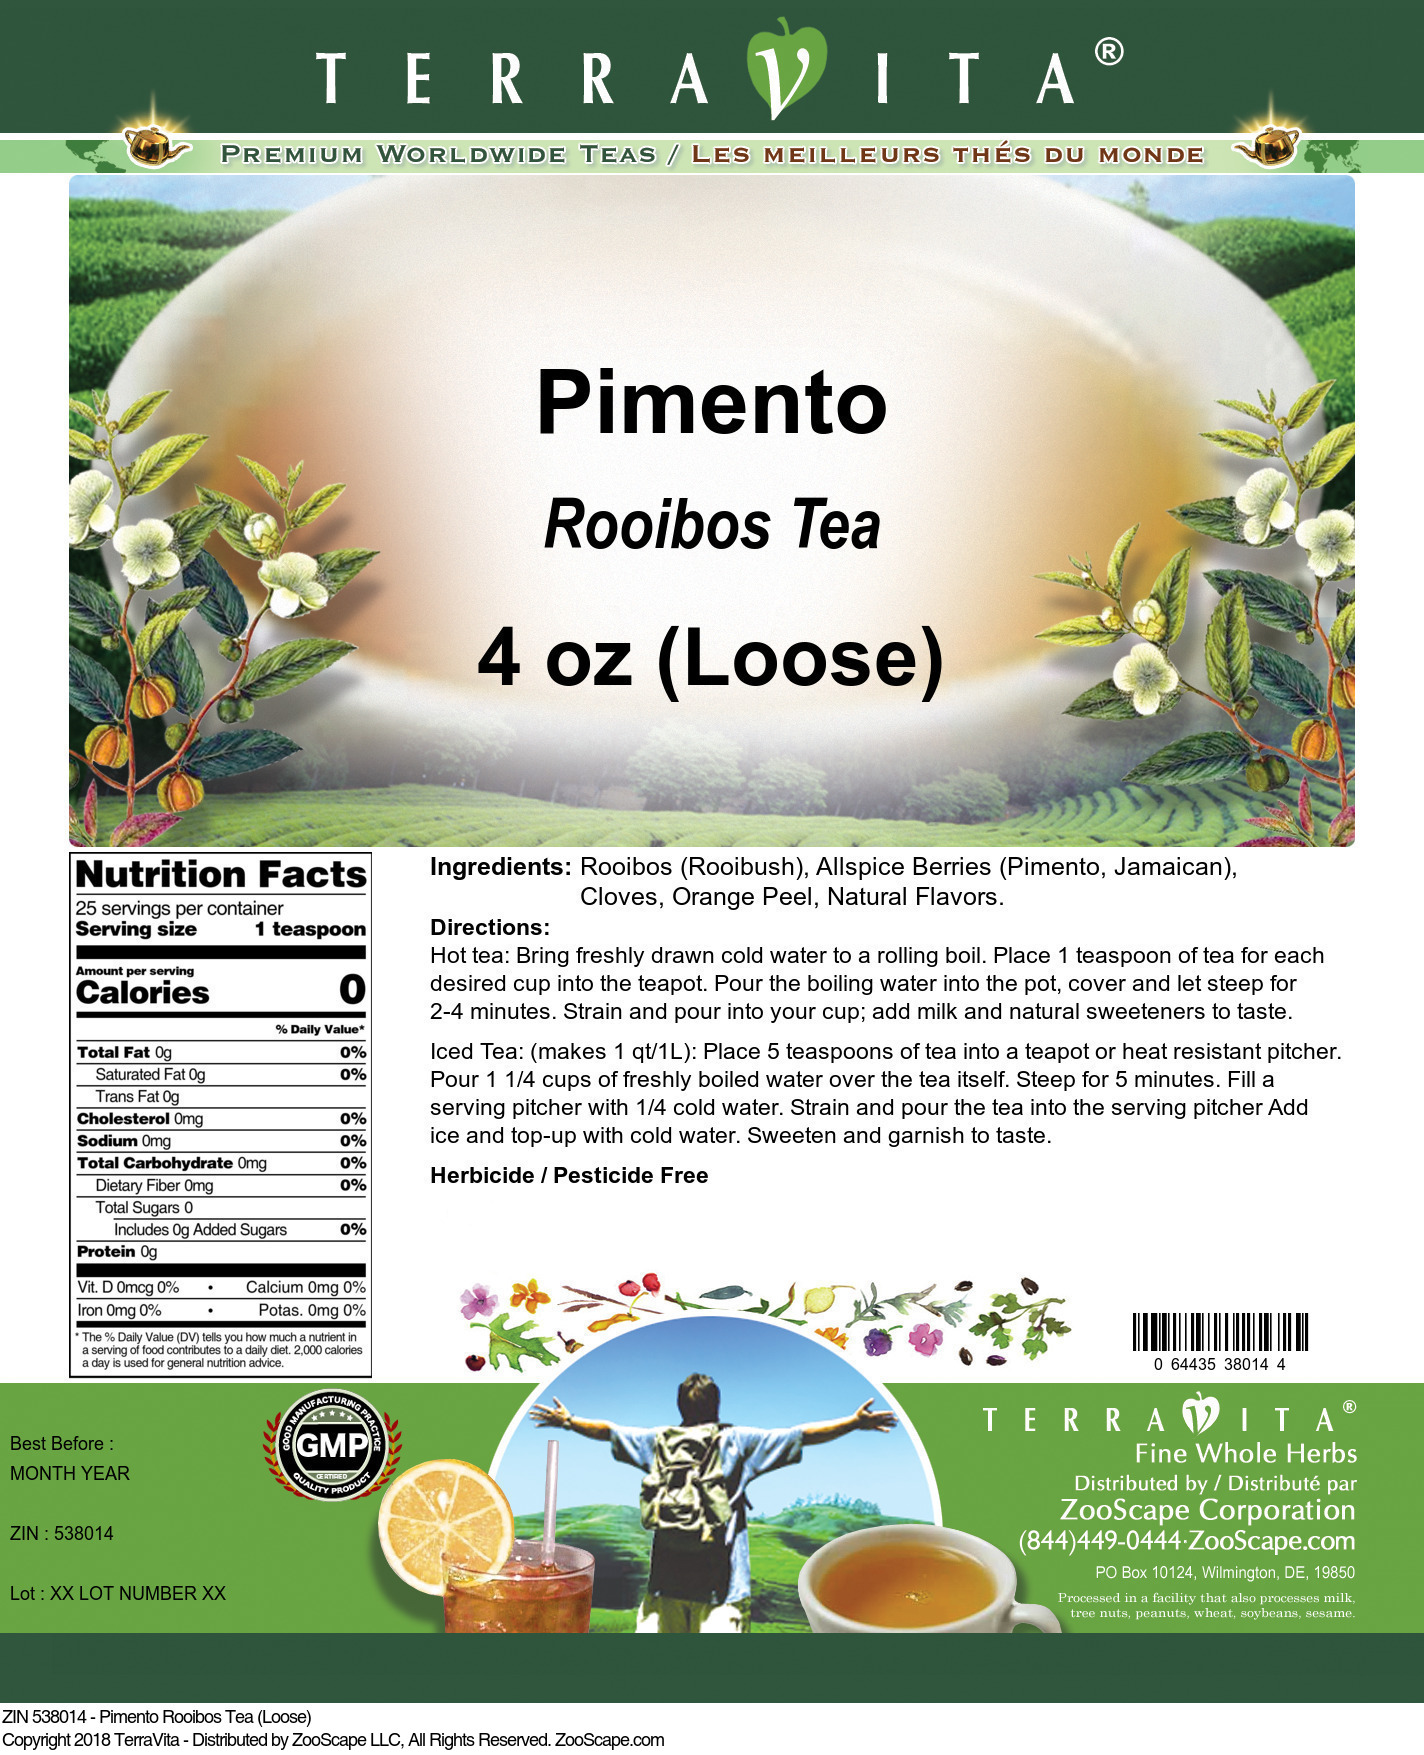 Pimento Rooibos Tea (Loose) - Label